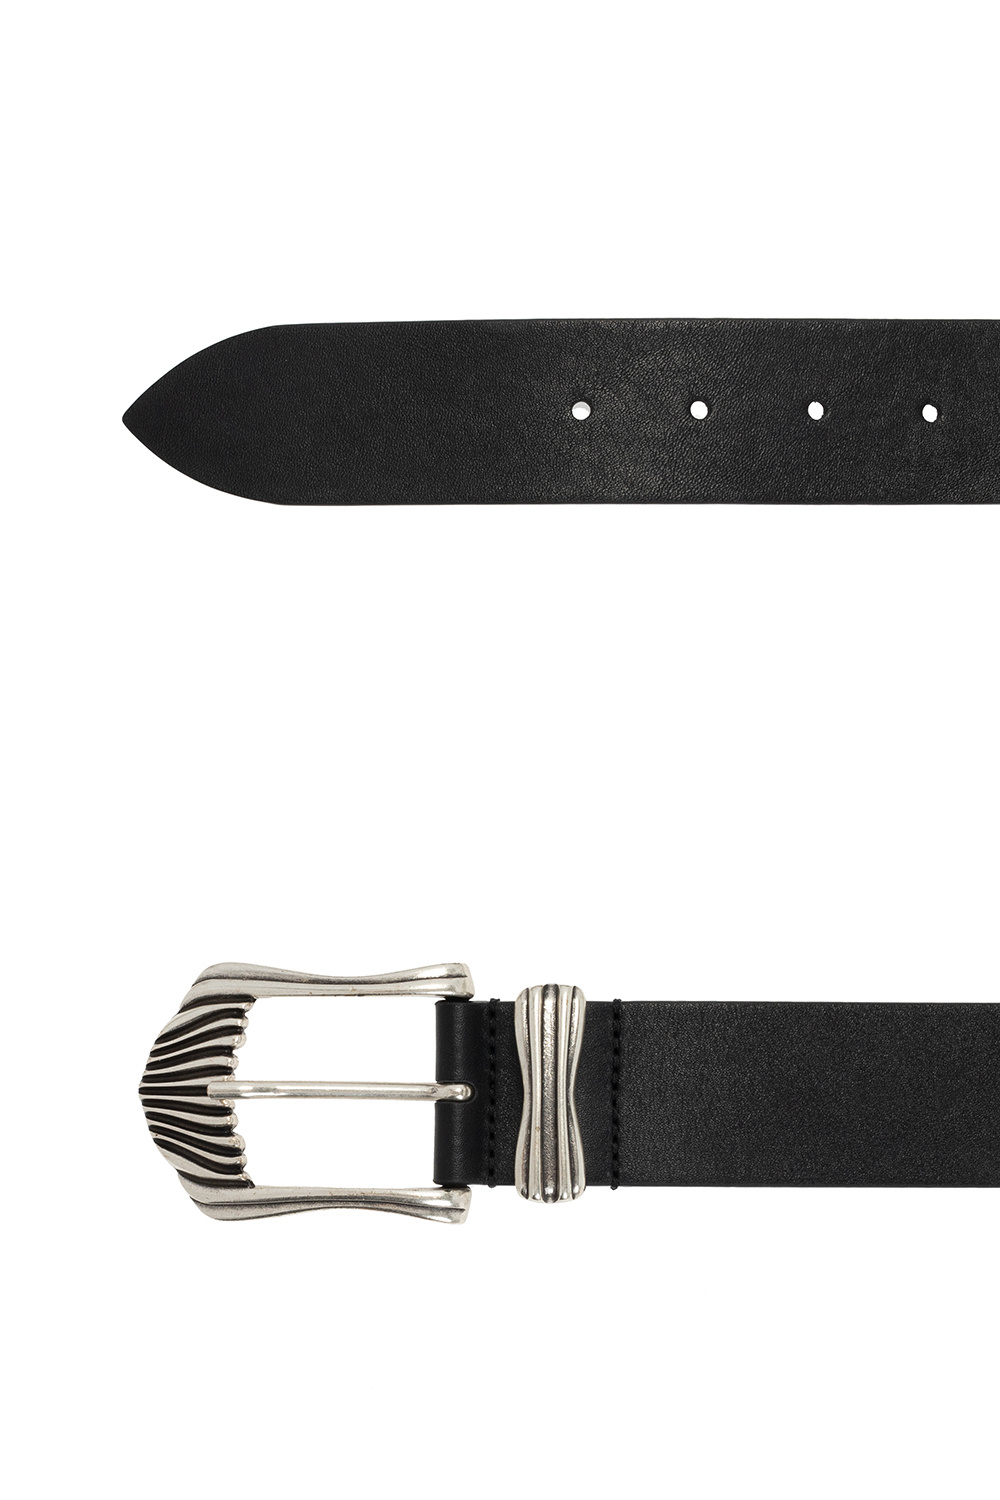 Iro Leather belt